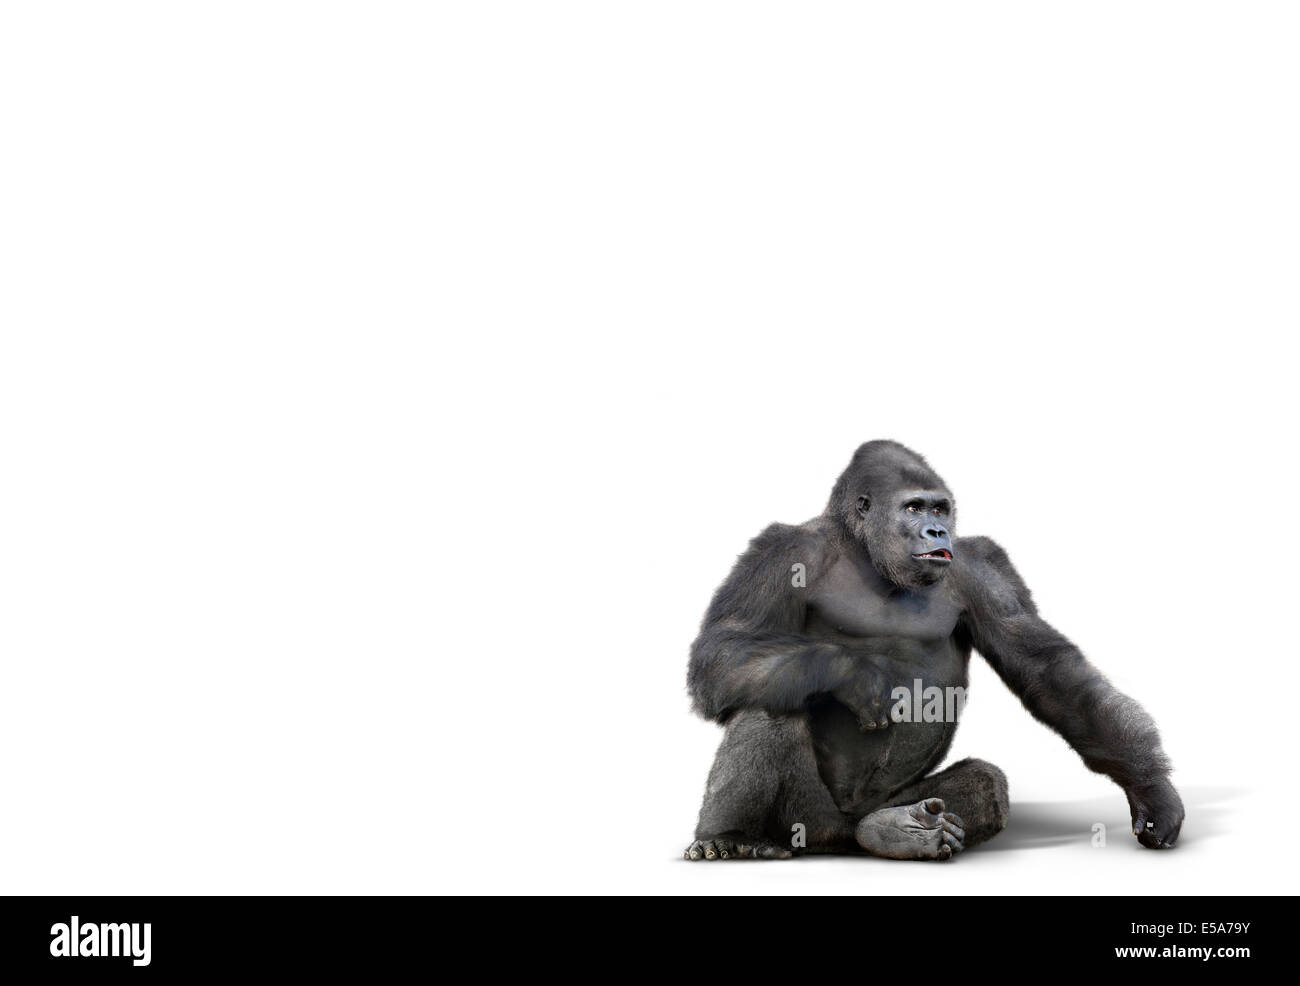 Gorilla sitting in studio Stock Photo